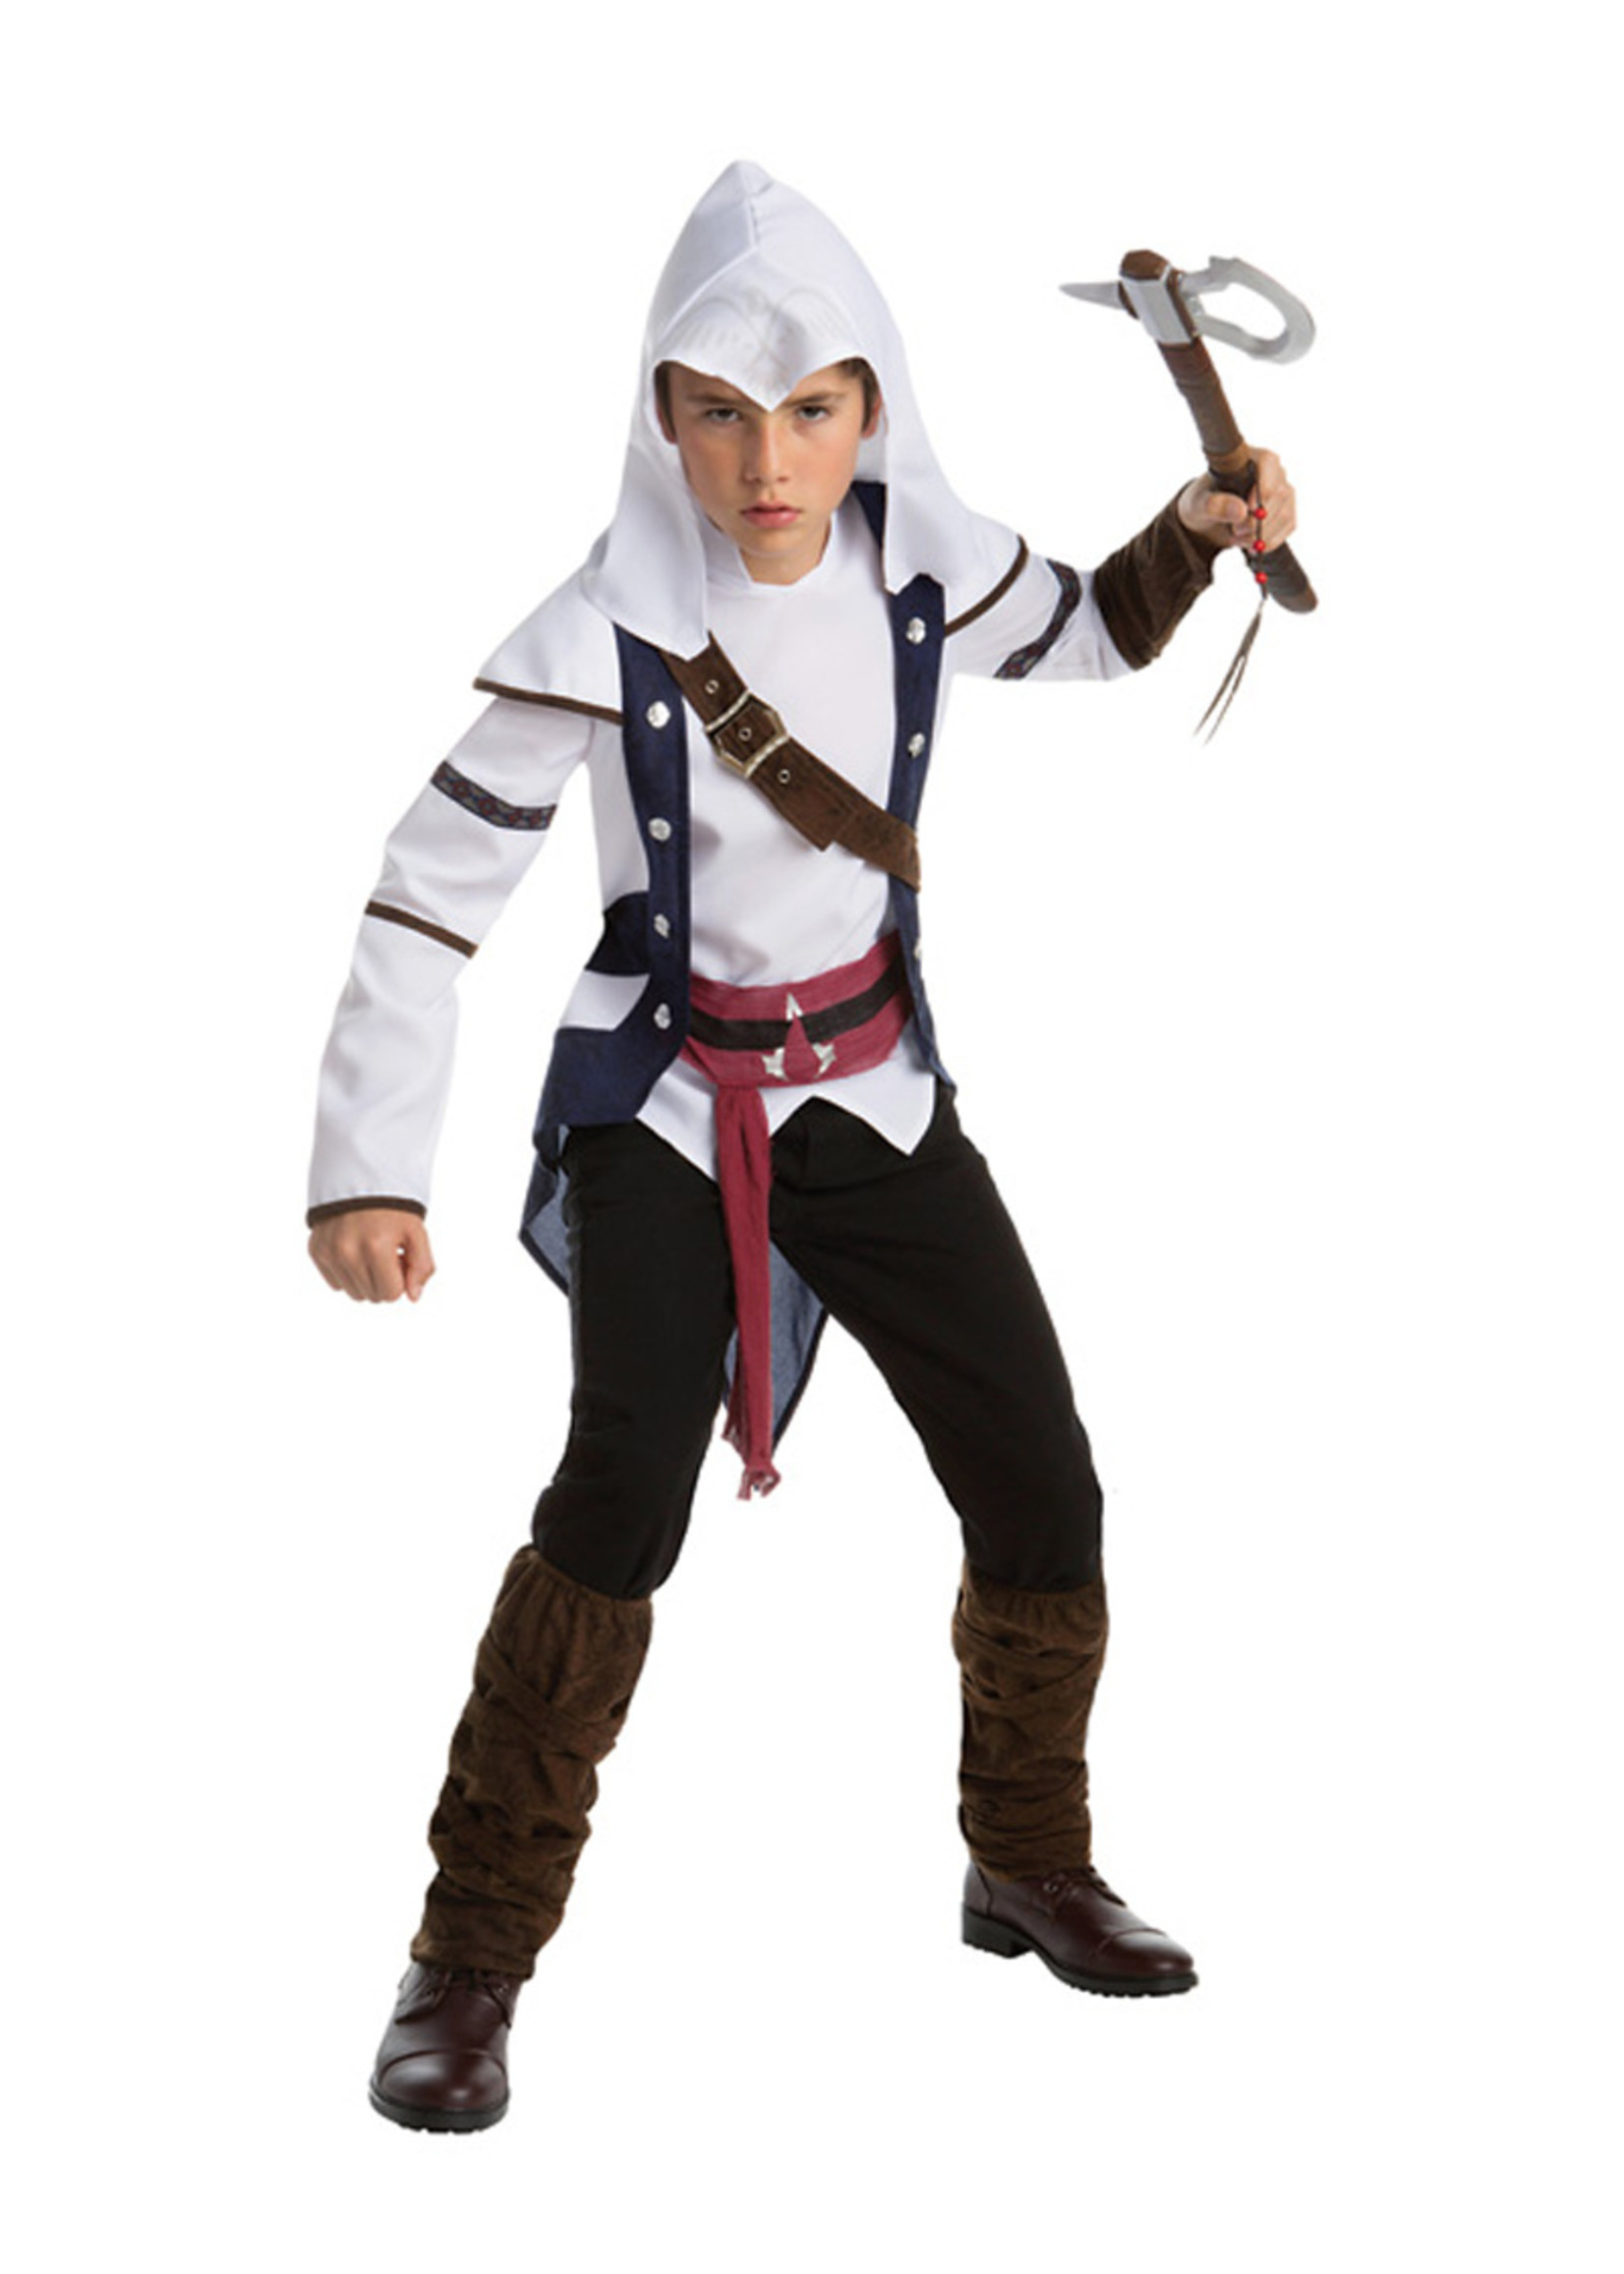 Connor - Assassin's Creed Costume - Boys